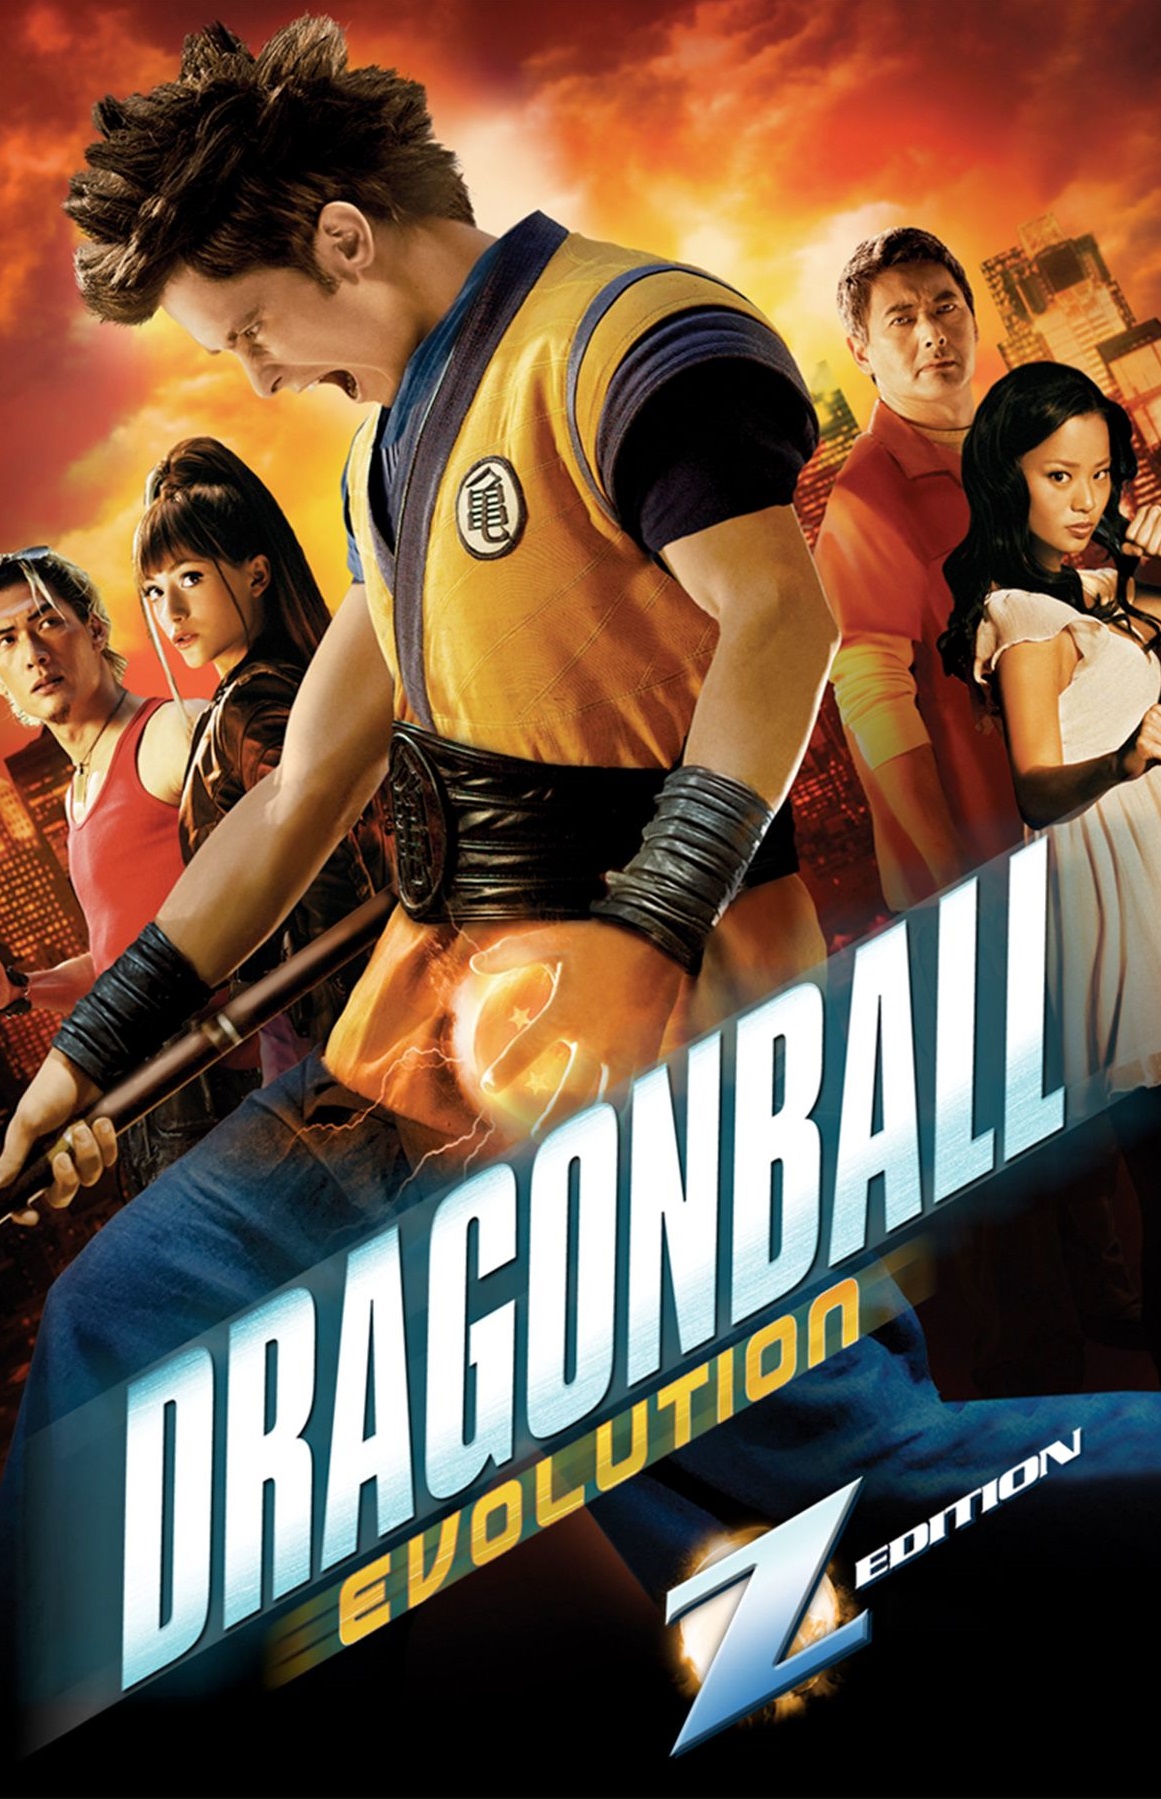 Dragonball Evolution 2009 Tamil Dubbed` Action Movie Online